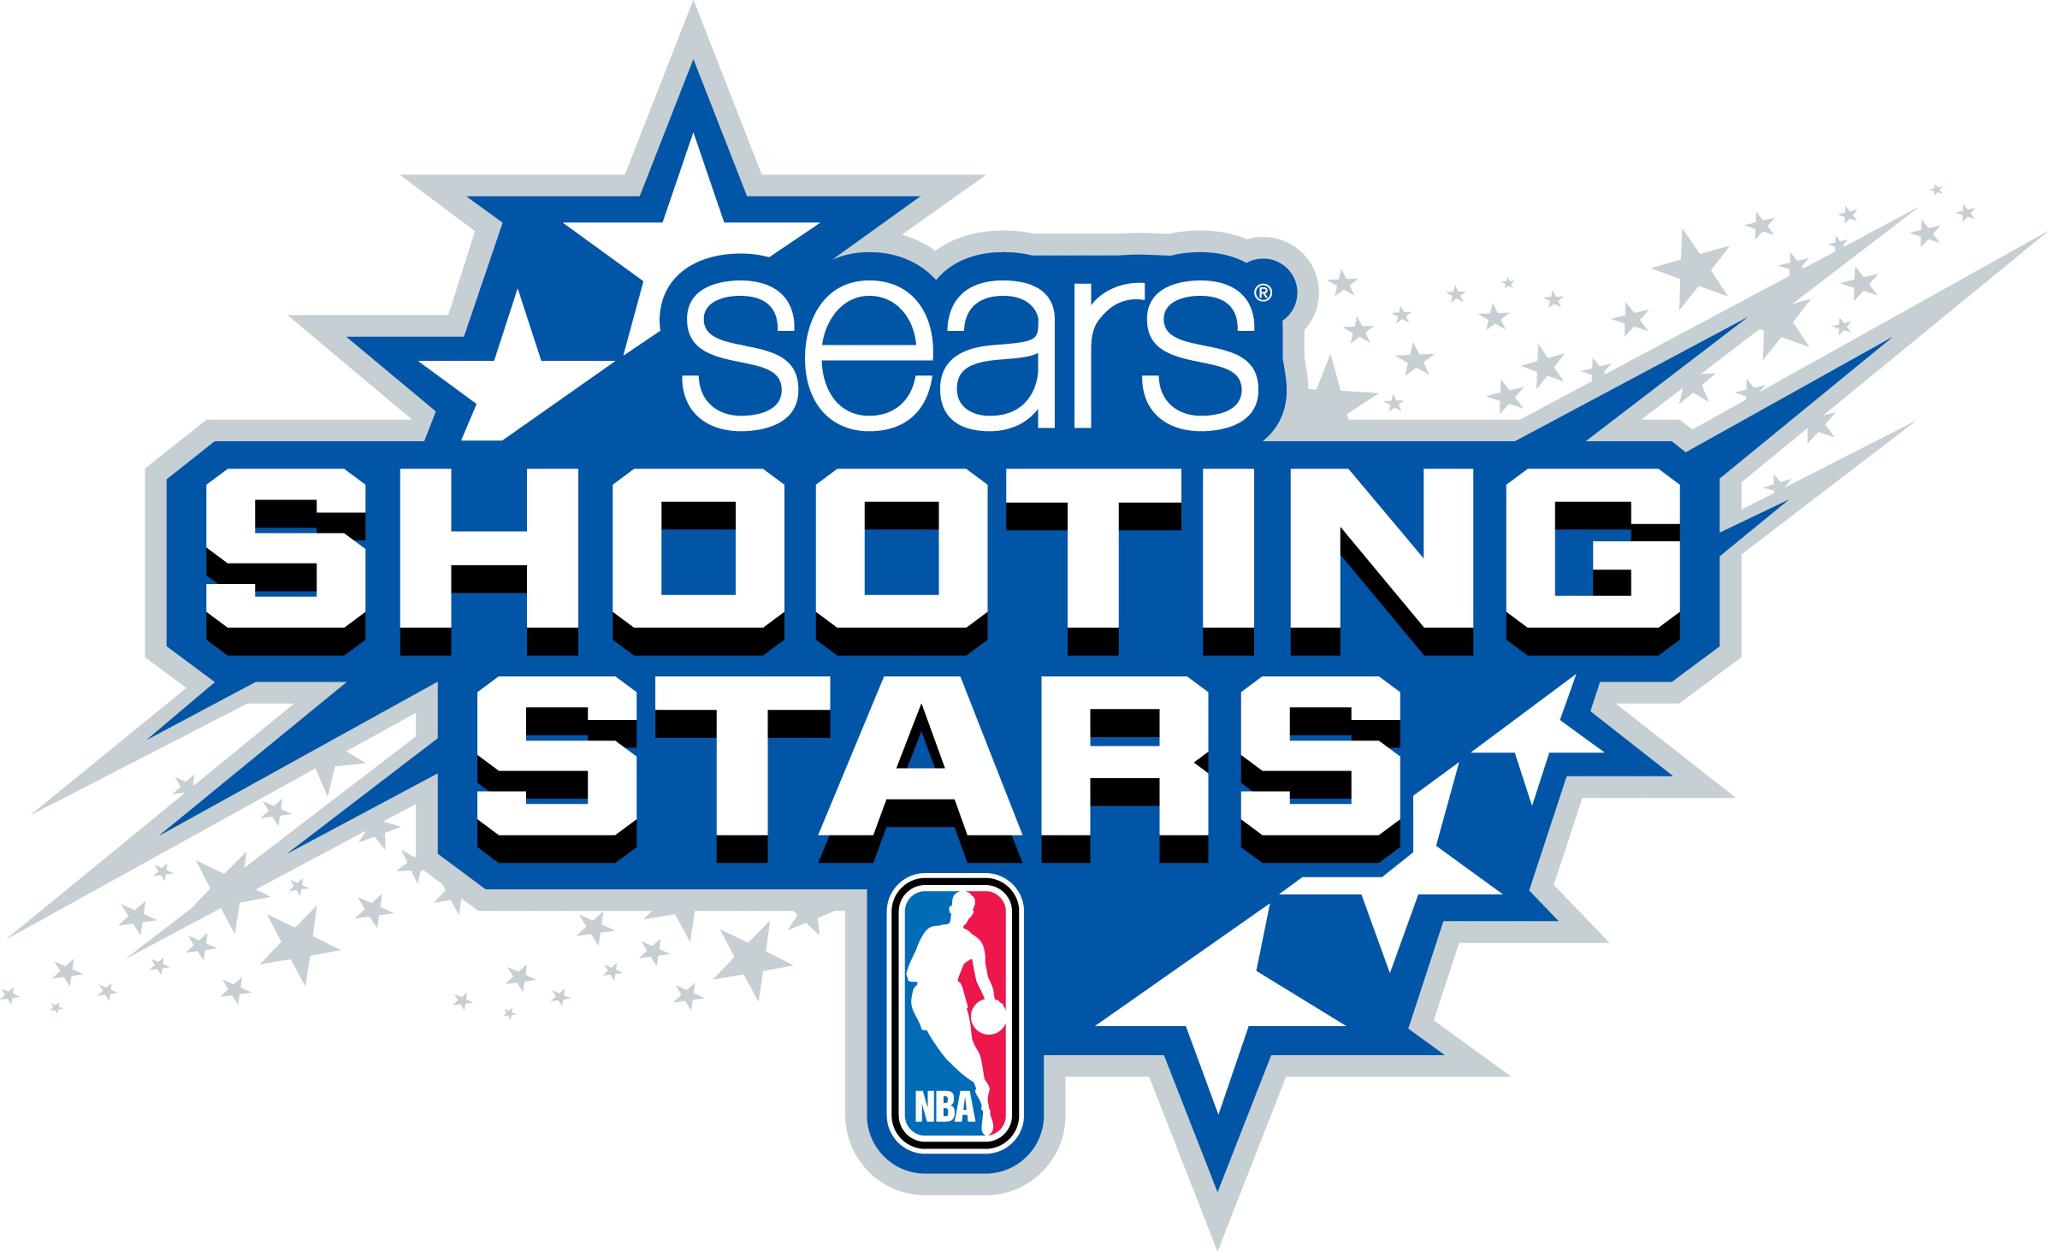 2013 NBA All Star Sears Shooting Stars.jpg